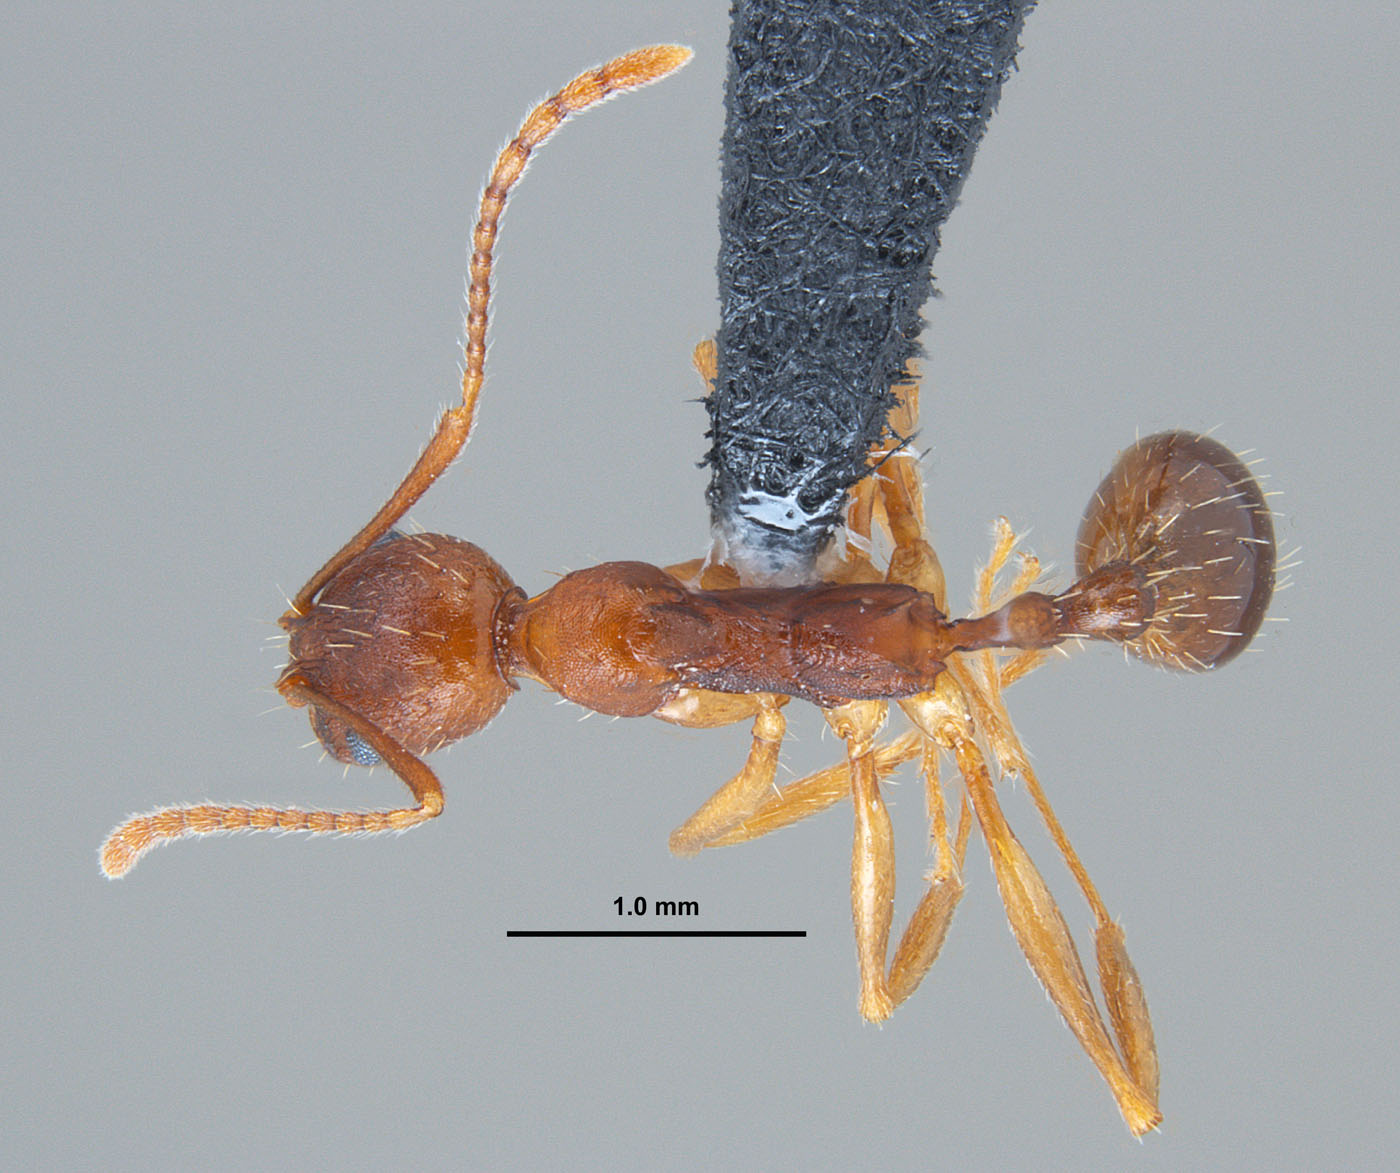 Aphaenogaster carolinensis dorsal view of worker